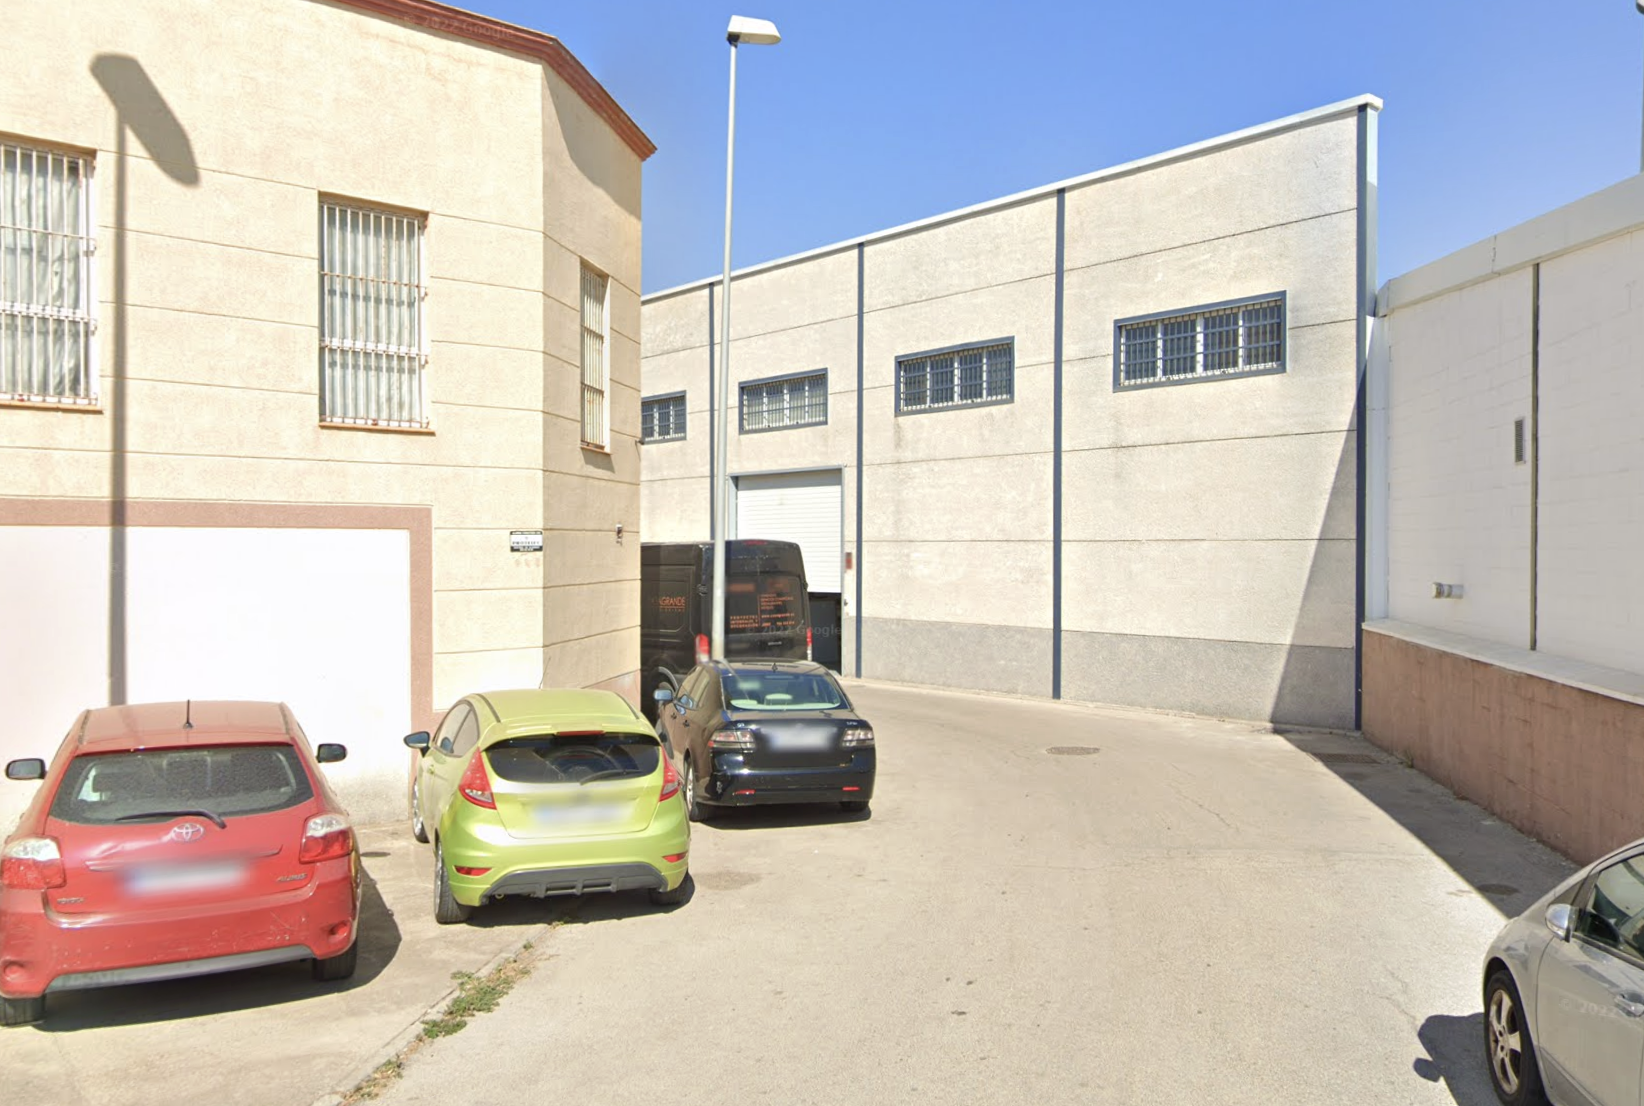 Imagen de Google Maps de naves del Parque Empresarial de Jerez, donde se ubicaba la sede social de la empresa quebrada.